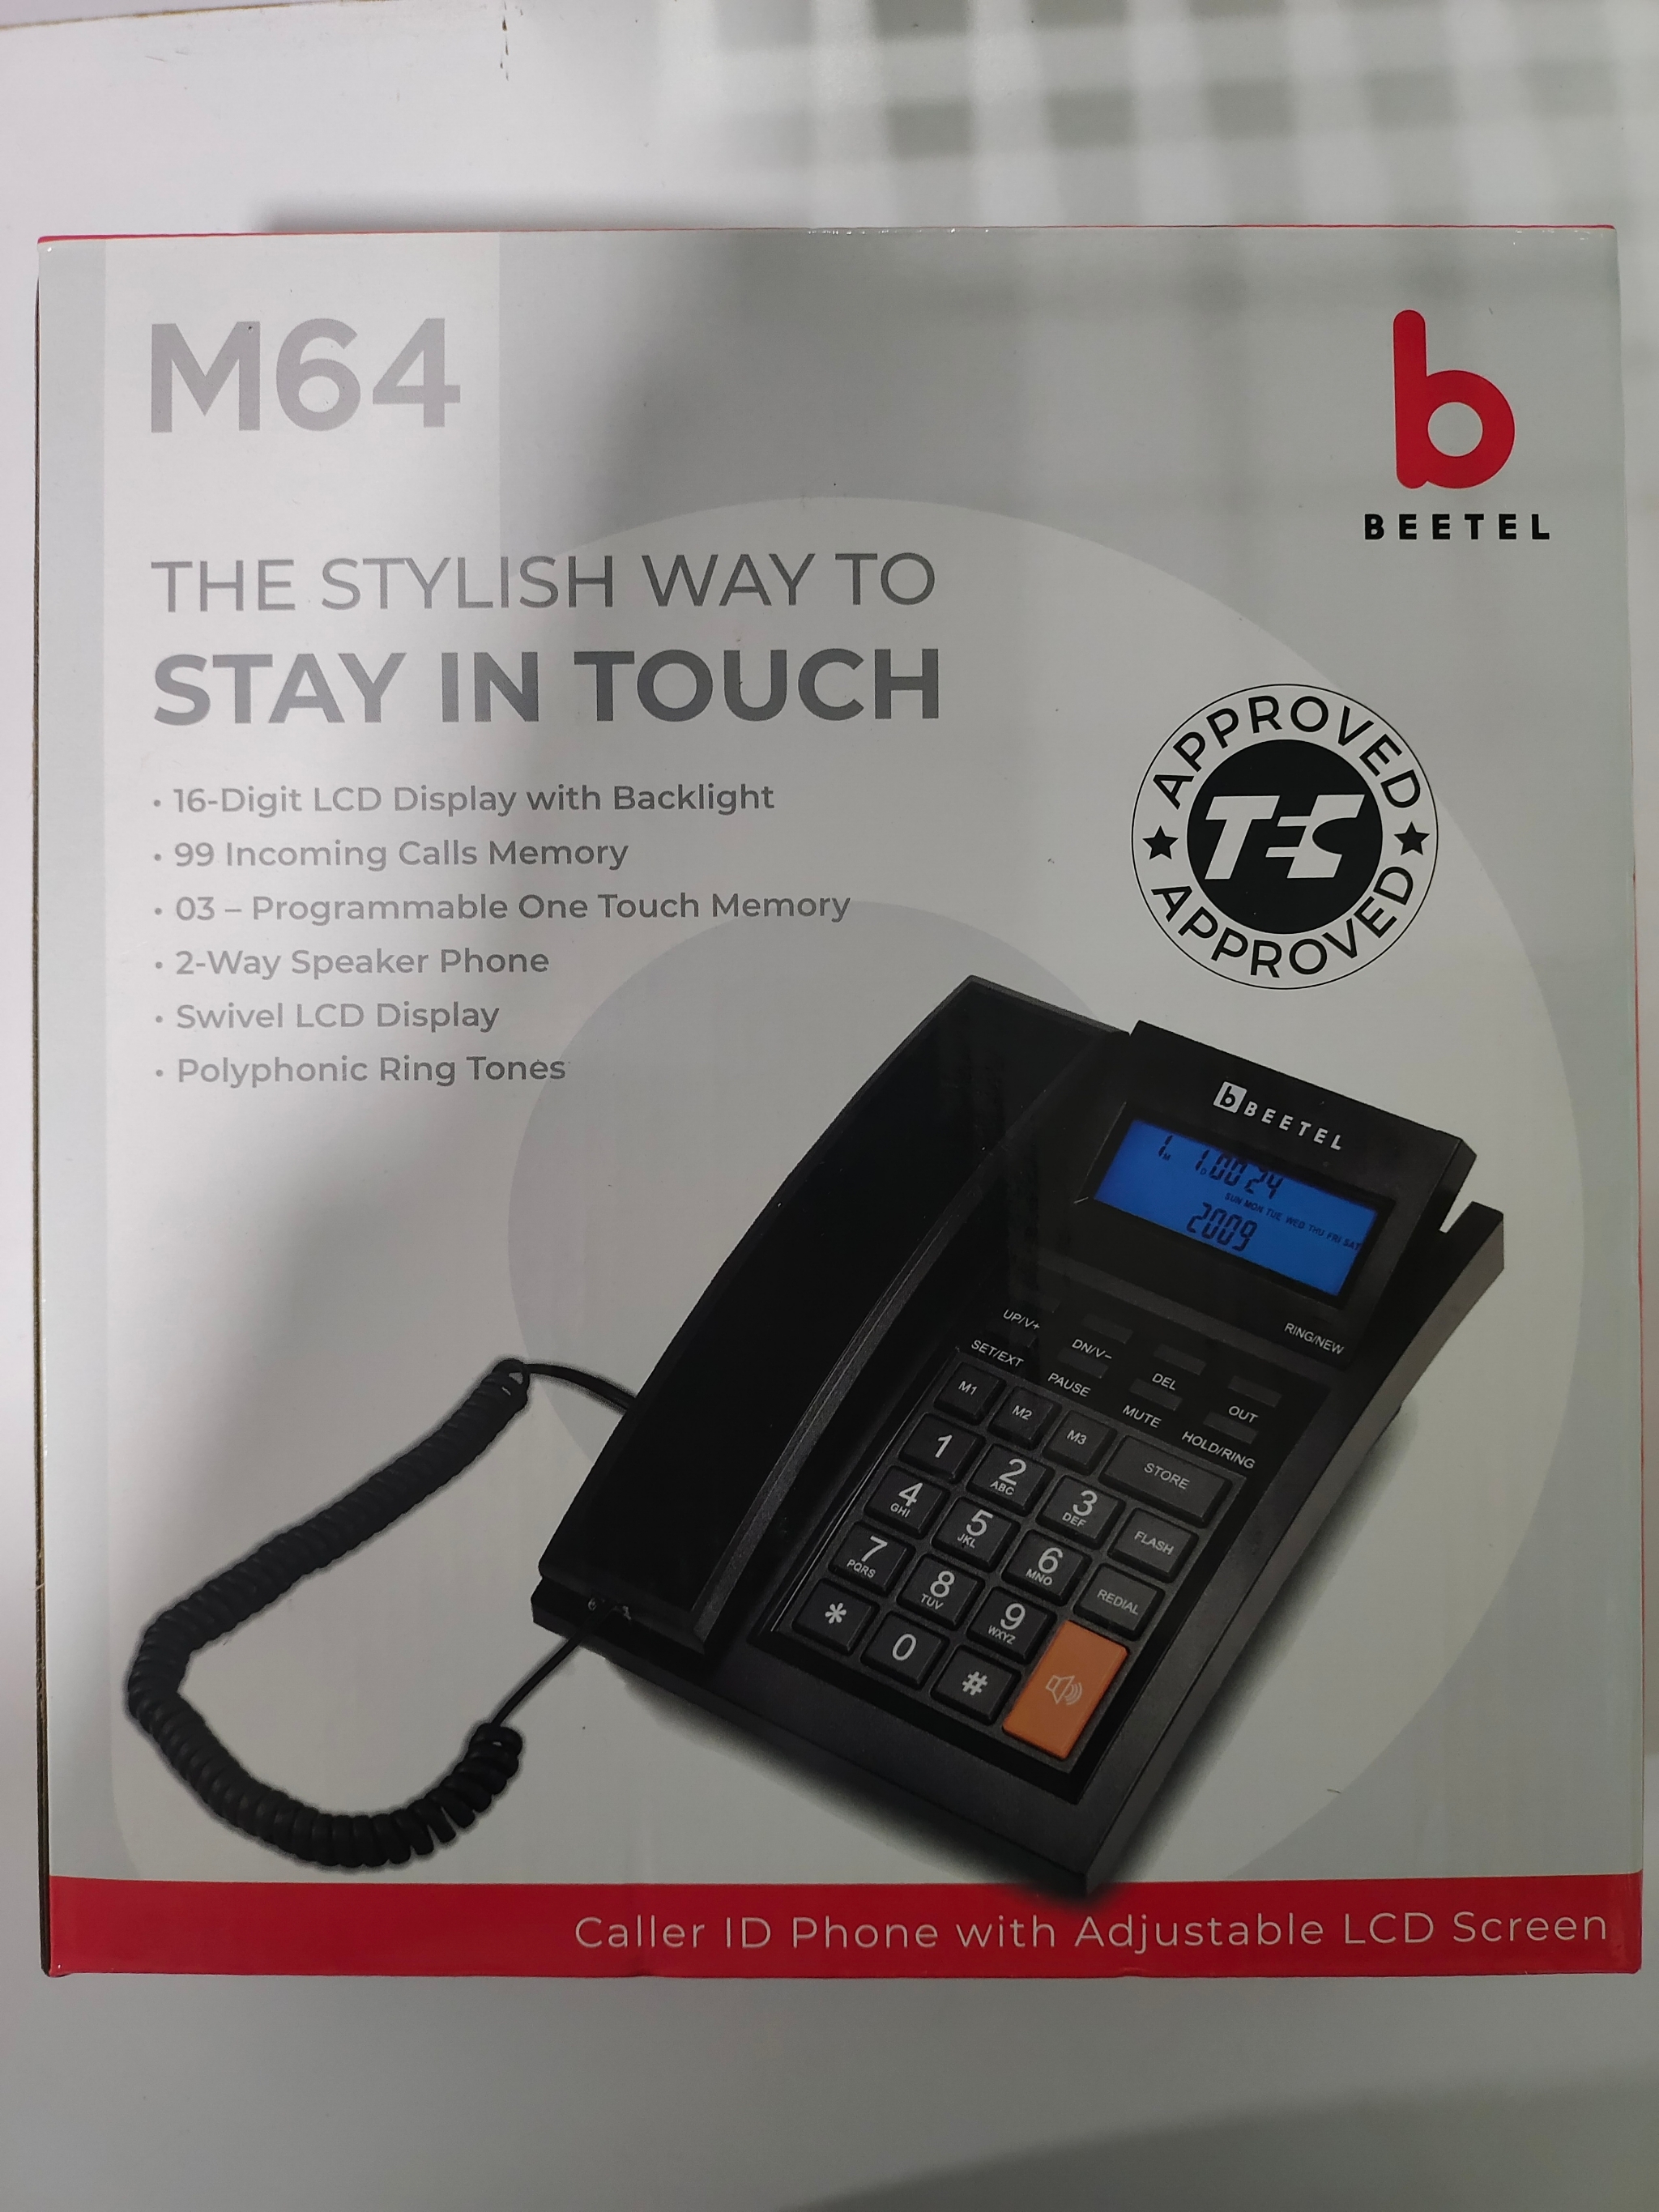 Beetel C11 Basic Landline Phone, For Office, Corded at Rs 460 in New Delhi